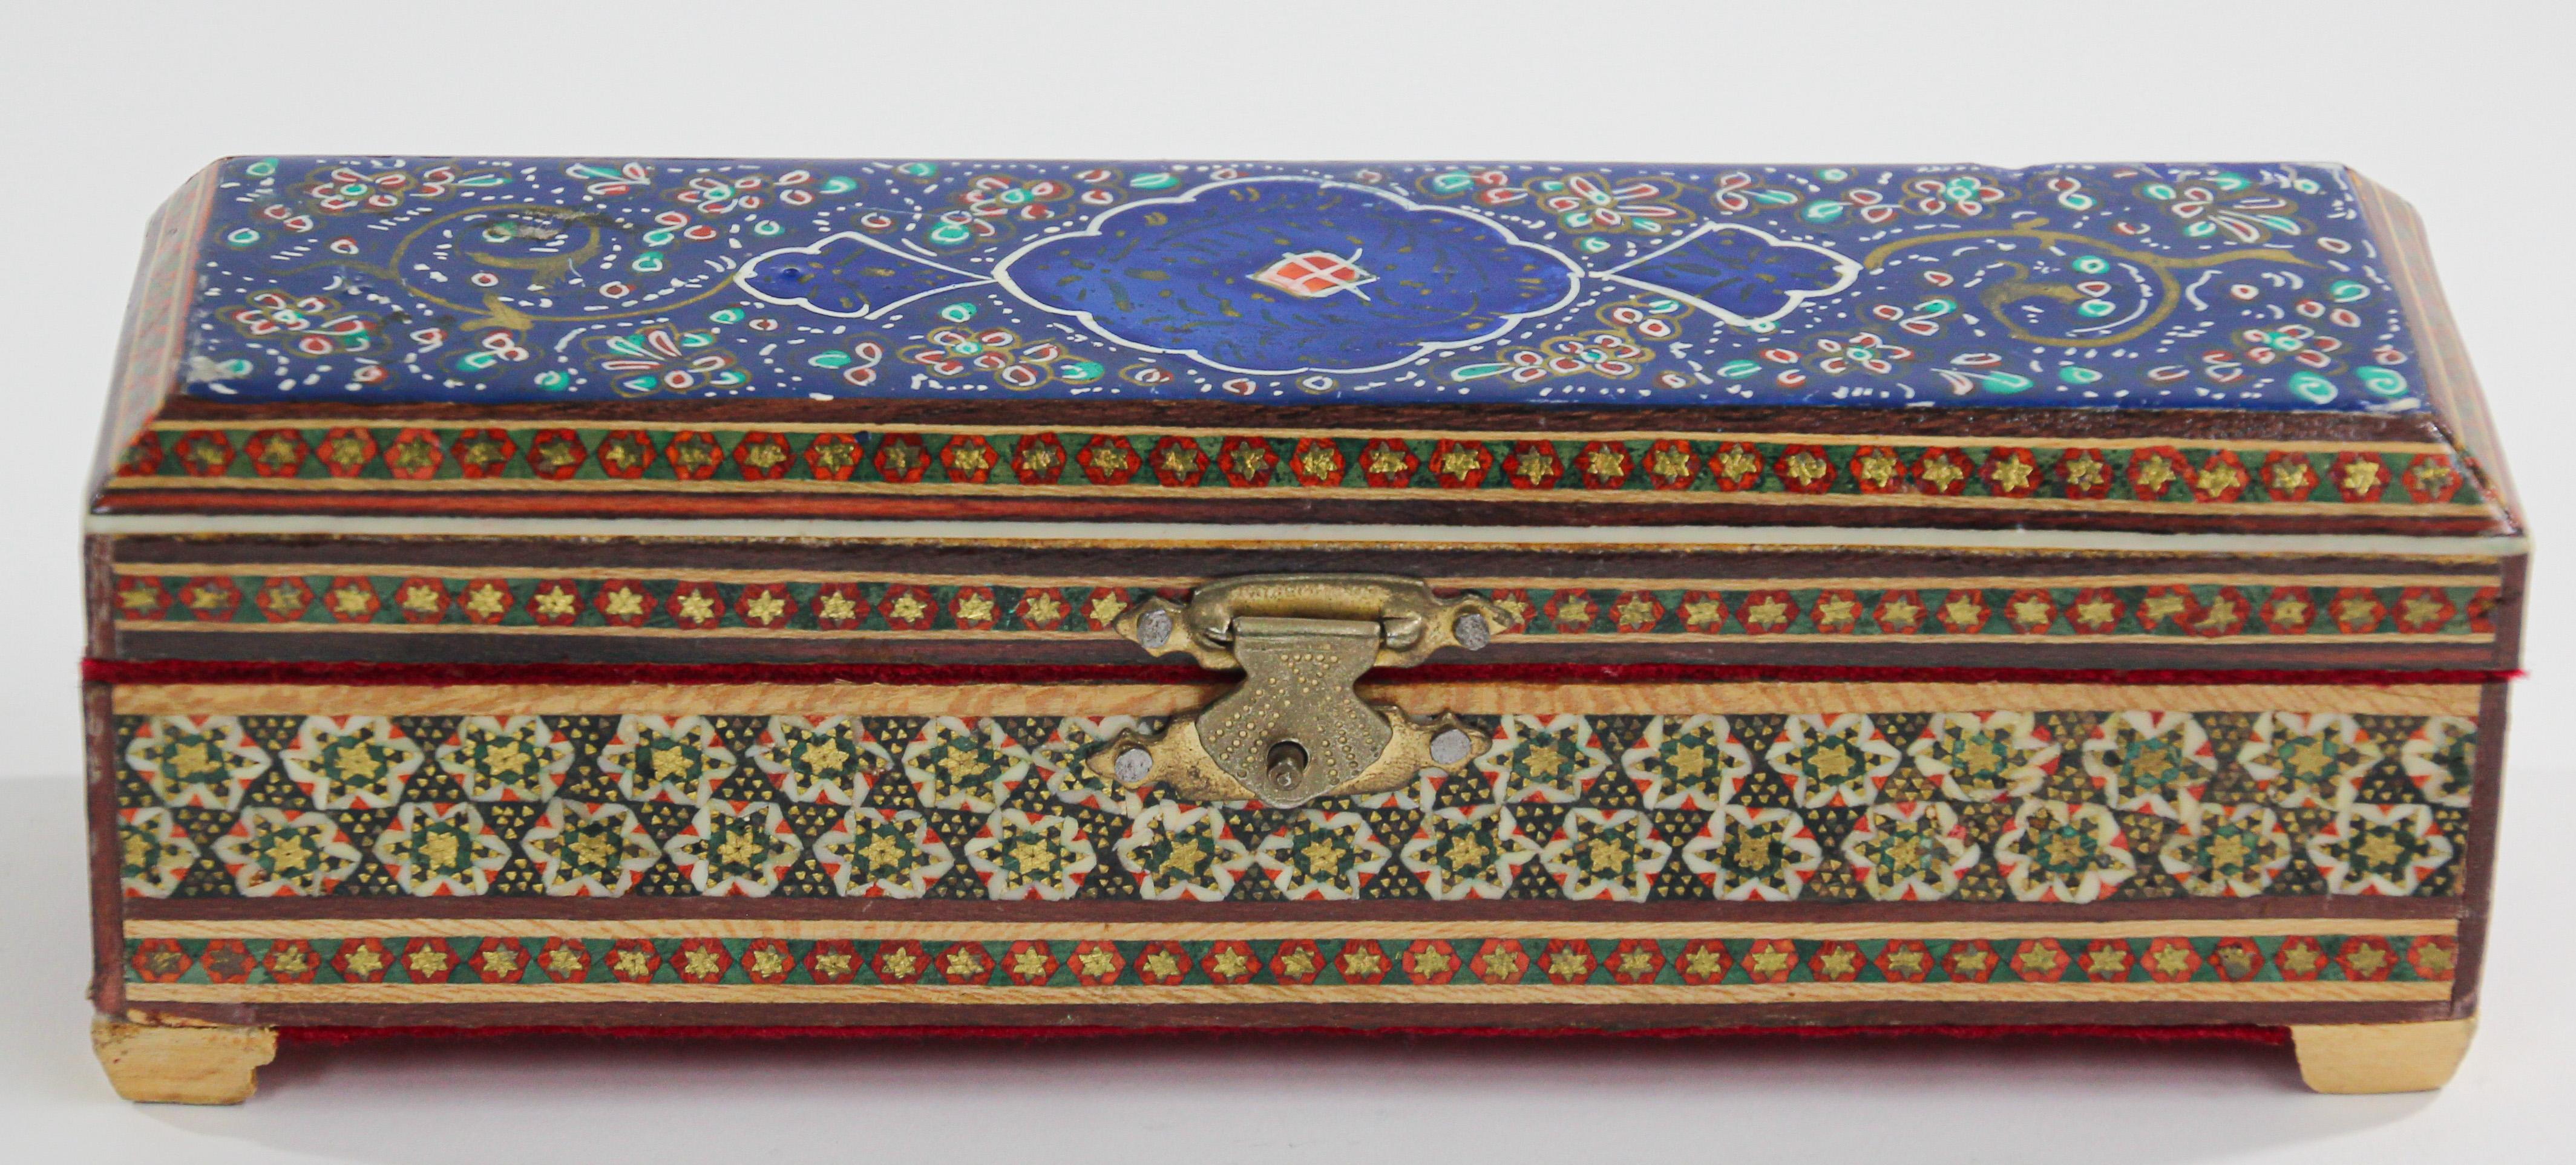 1950s Middle Eastern Moorish Inlaid Jewelry Trinket Mosaic Box 5